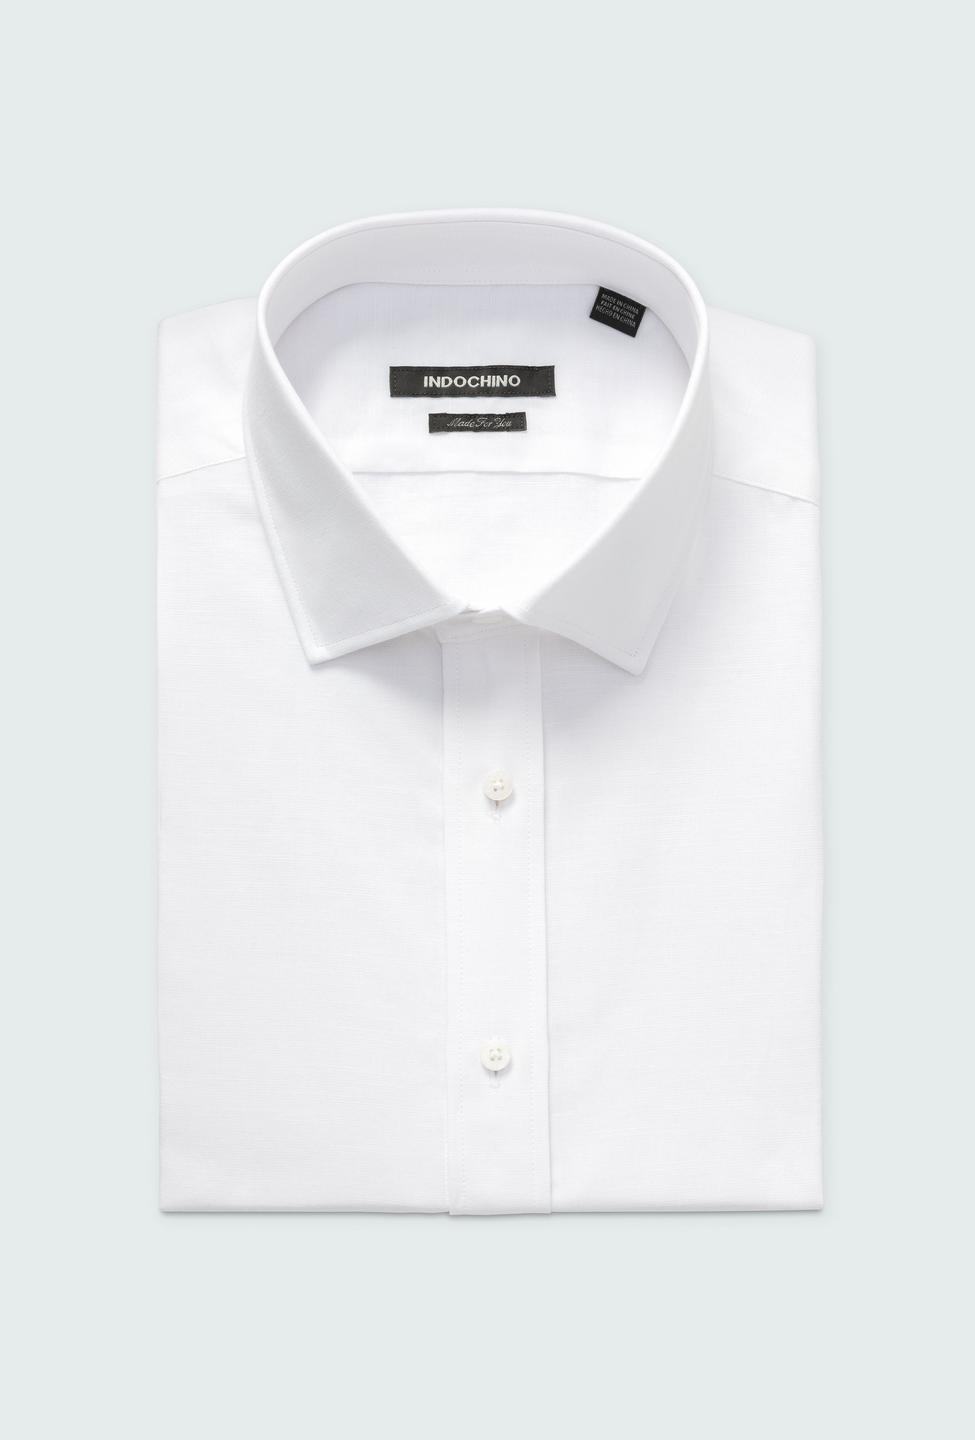 White shirt - Sudbury Solid Design from Seasonal Indochino Collection